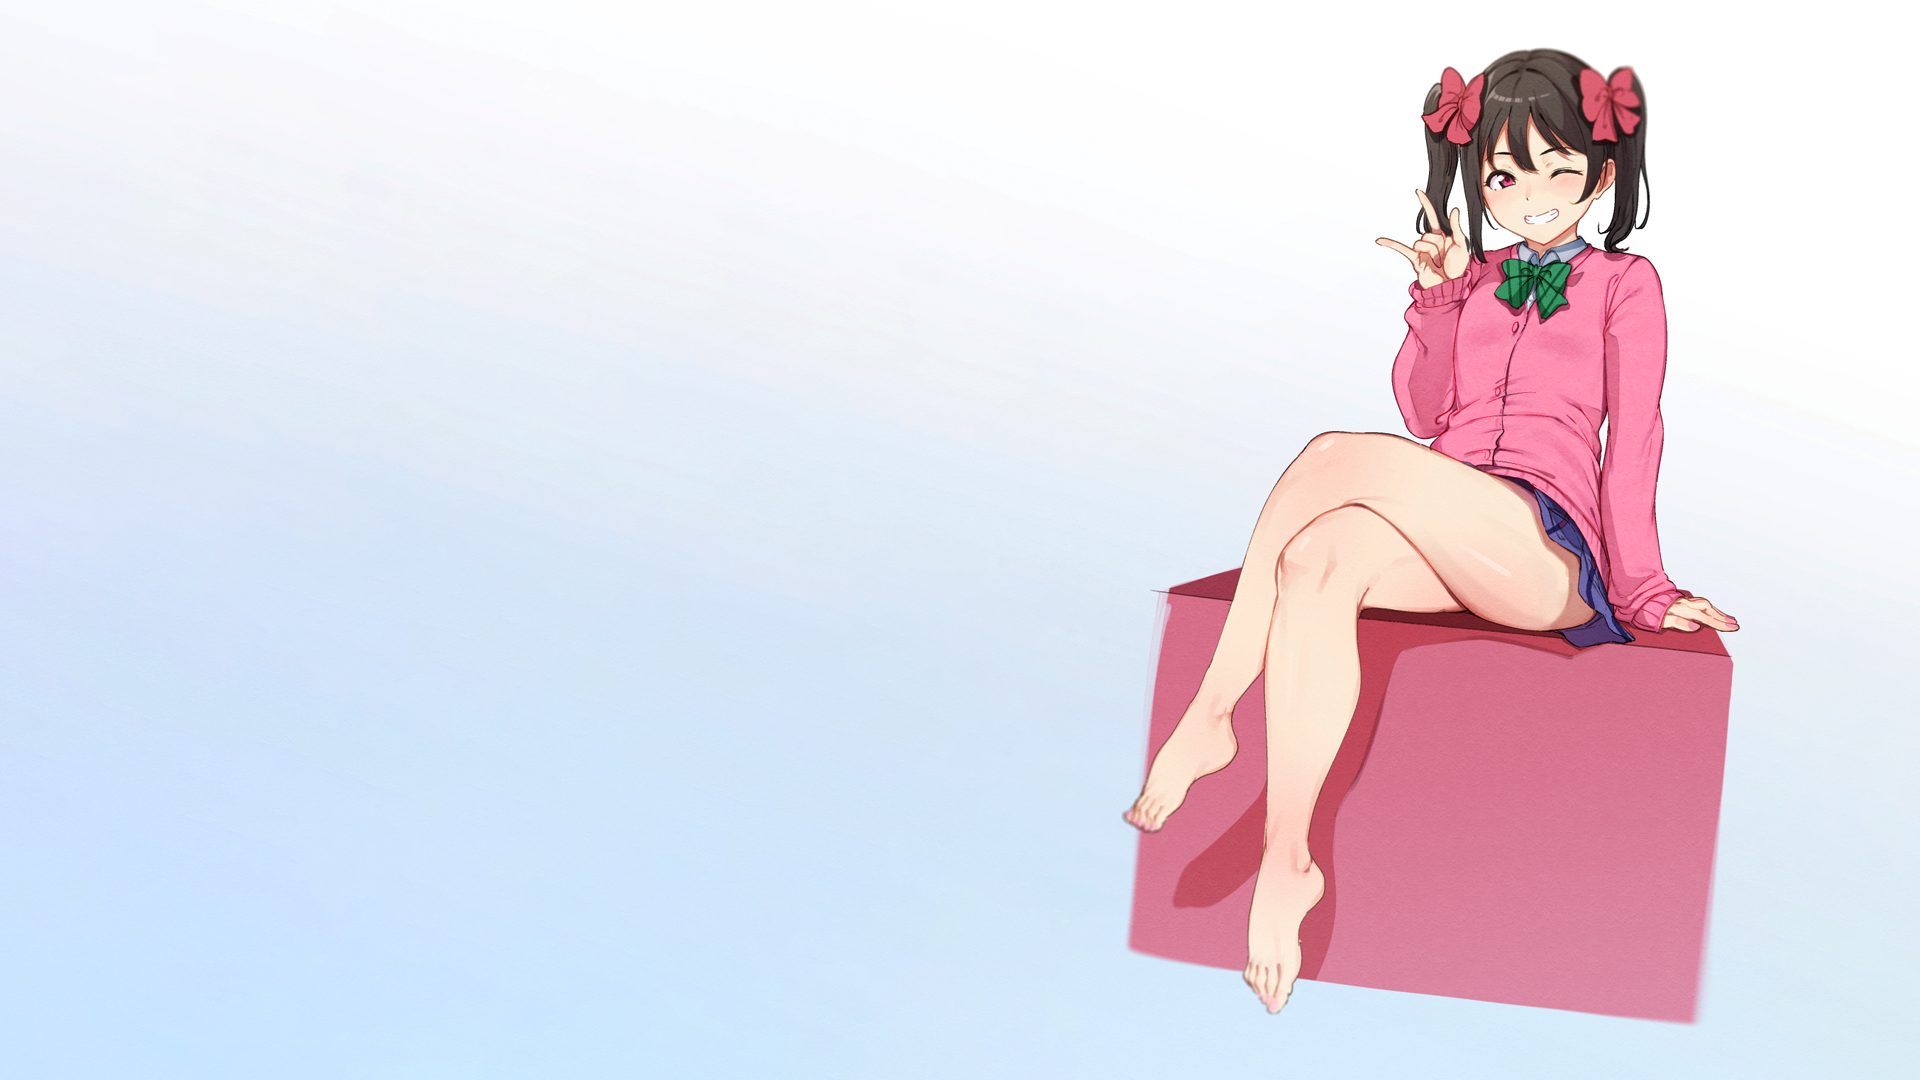 Anime 1920x1080 anime anime girls ecchi simple background Love Live! Yazawa Nico twintails thighs schoolgirl miniskirt school uniform legs crossed cardigan barefoot feet